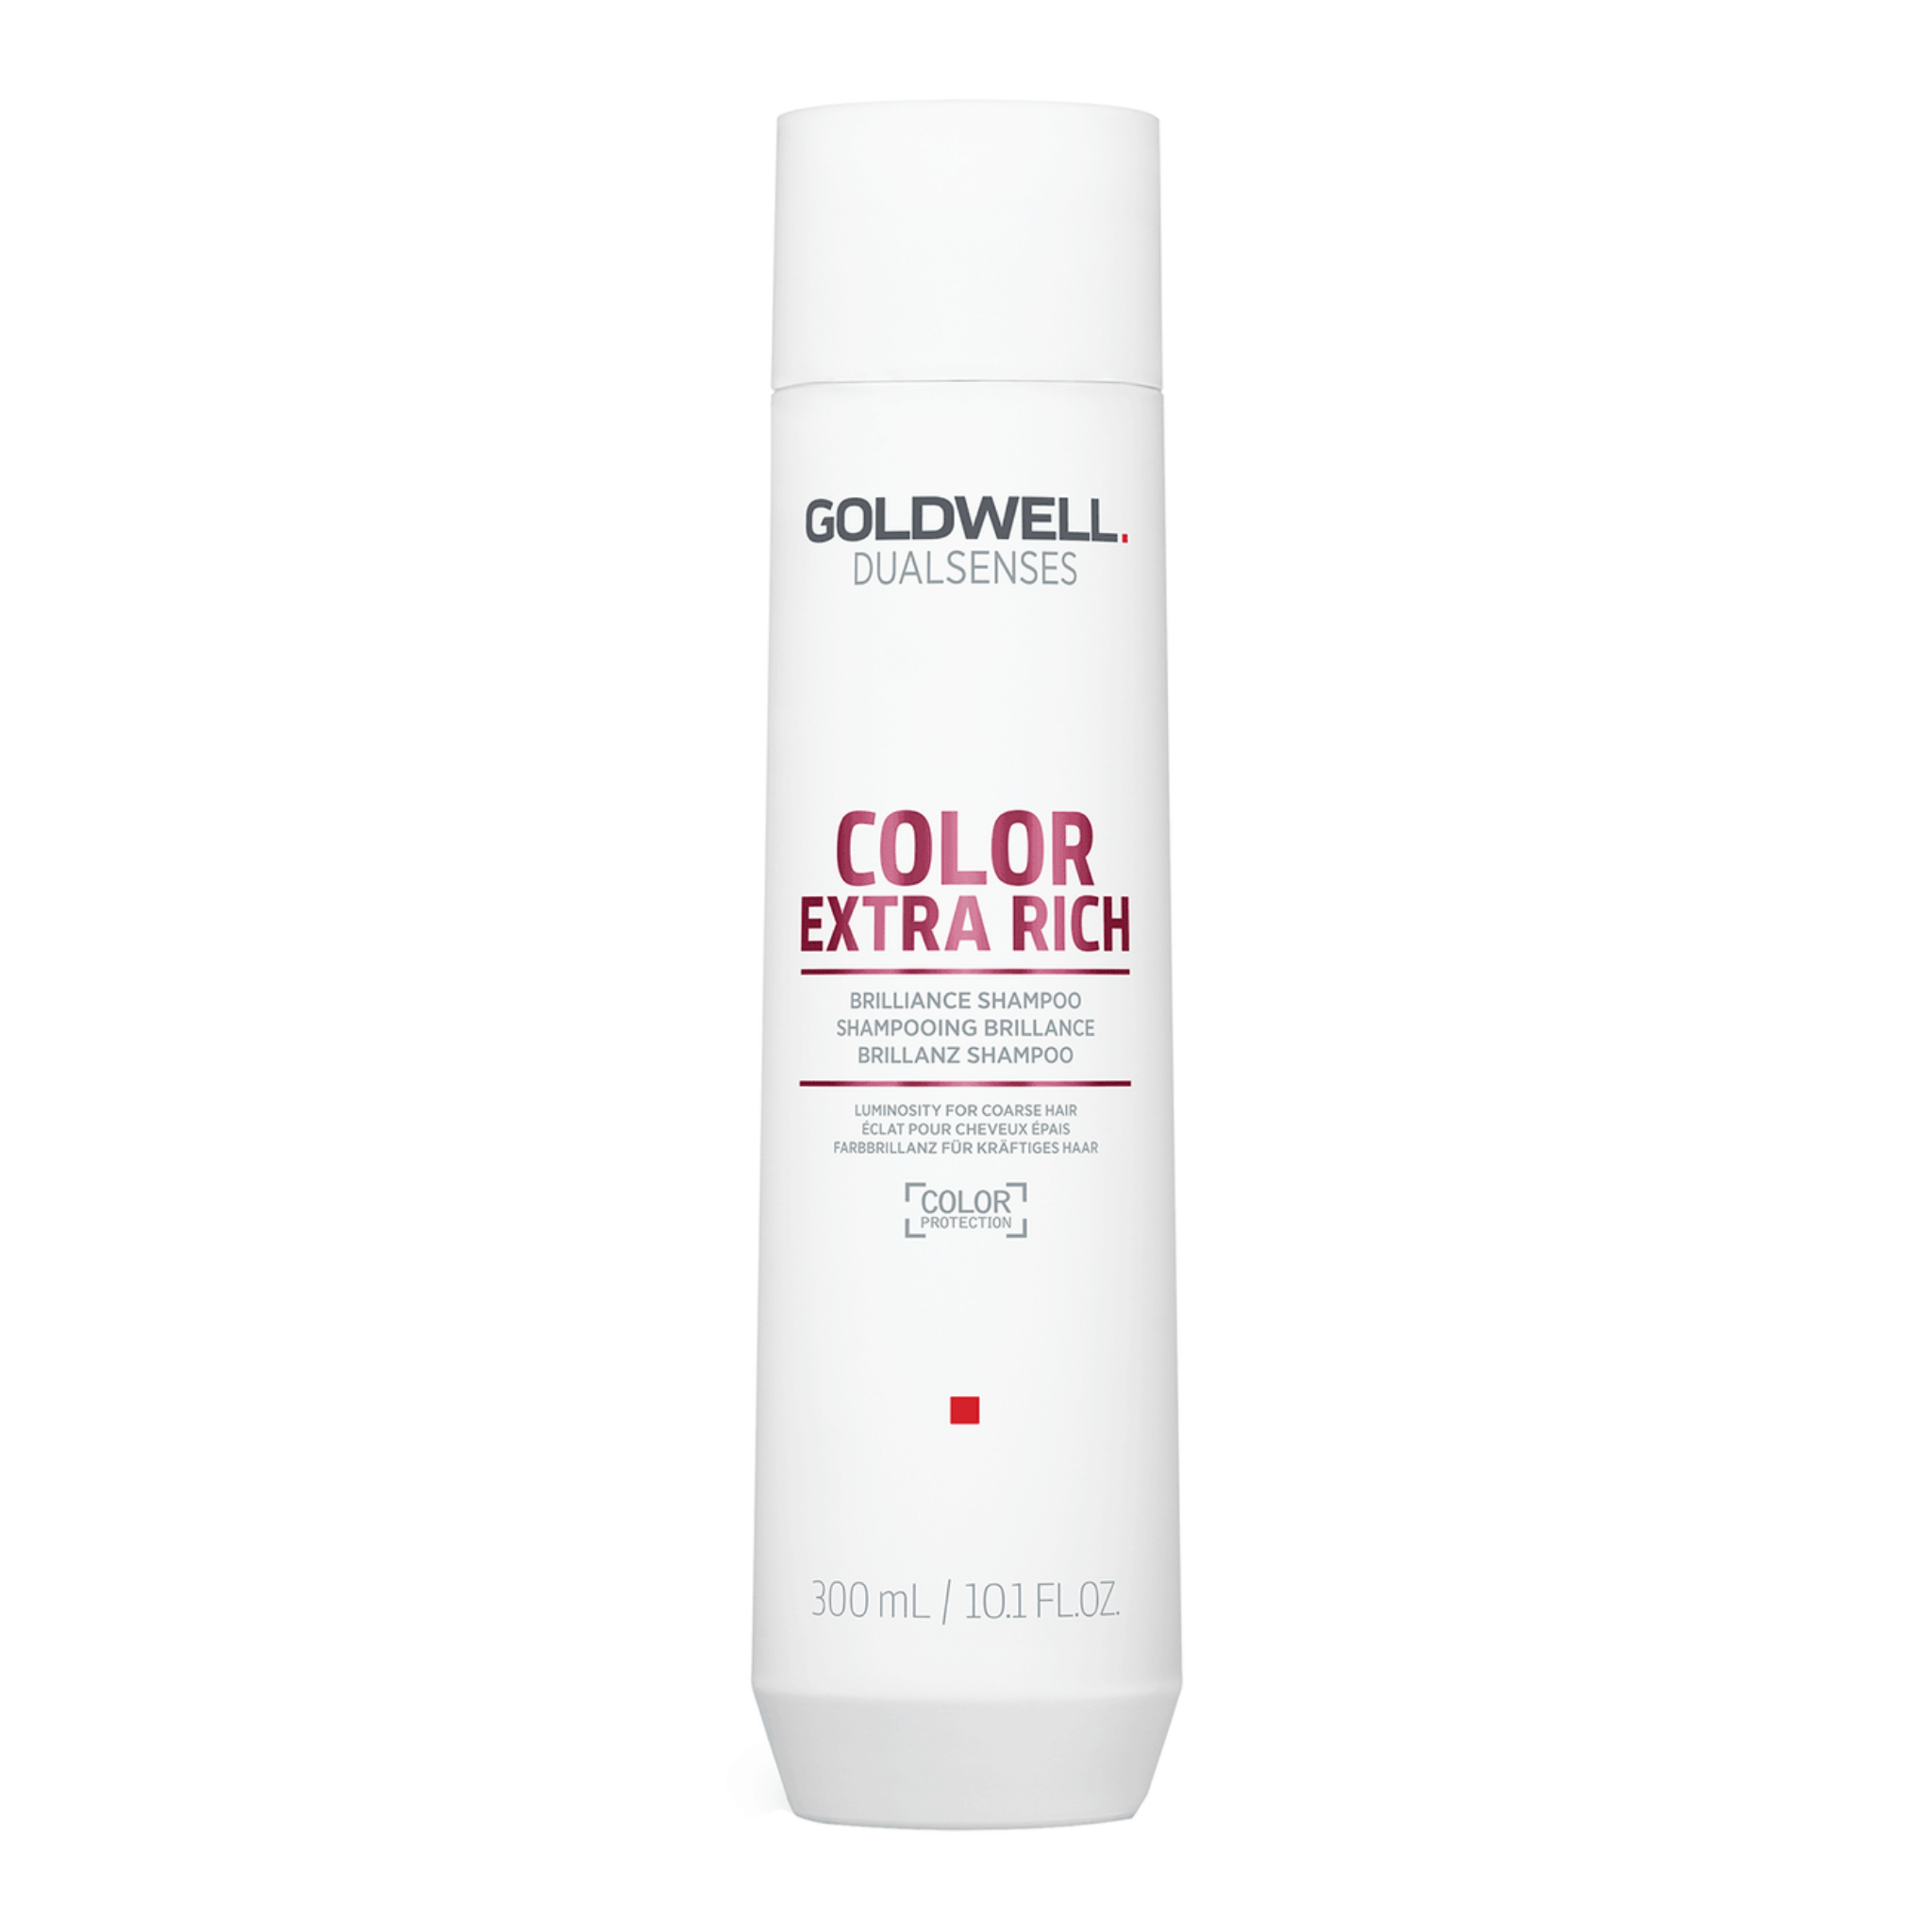 Goldwell. Dual Senses Color Extra Rich Shampoing Brillance - 300 ml - Concept C. Shop